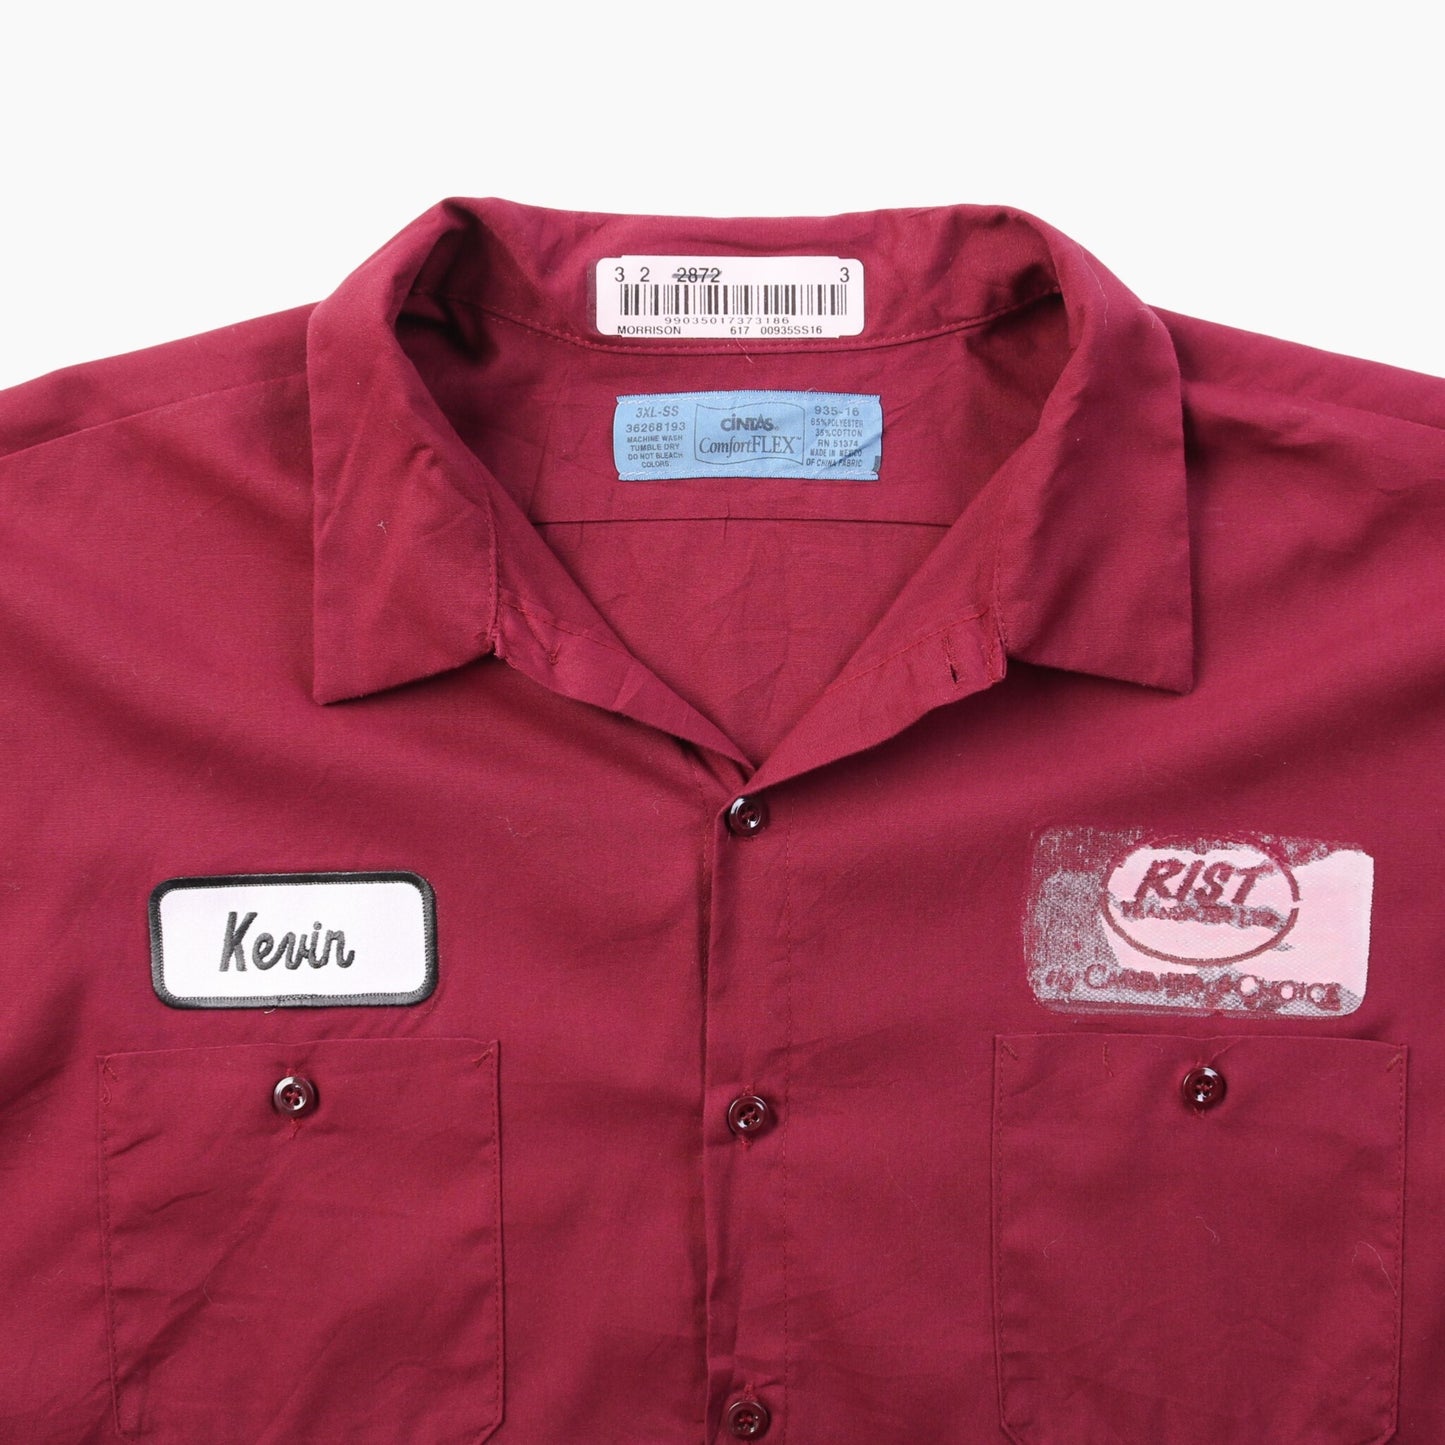 'Kevin' Garage Work Shirt - American Madness